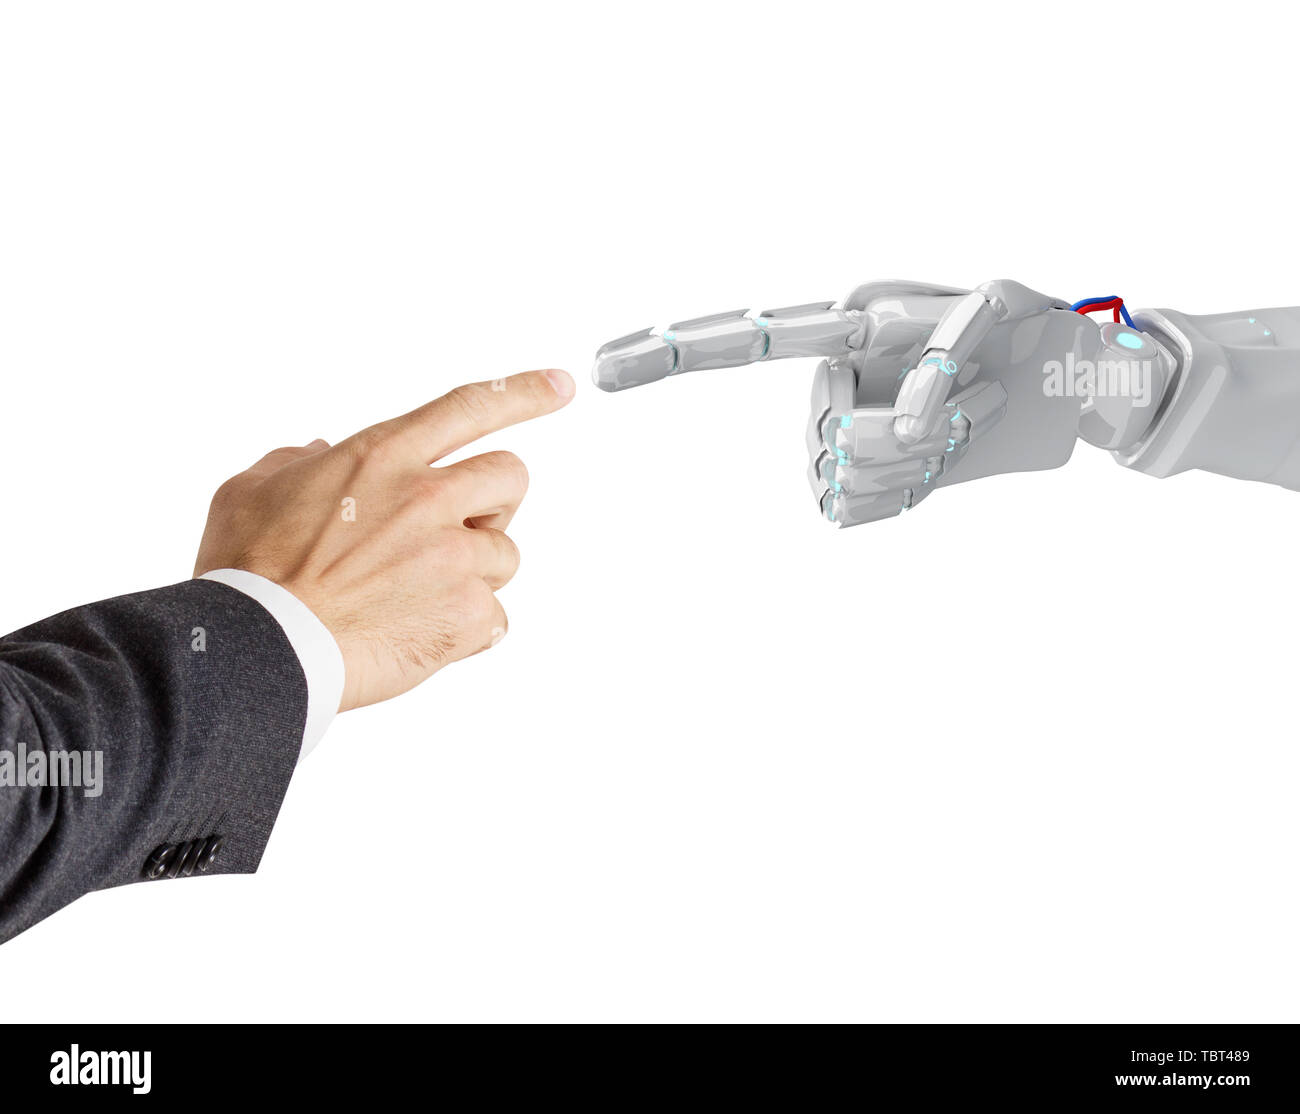 Menschliche Hand berühren Roboterhand. 3D-Rendering. Stockfoto